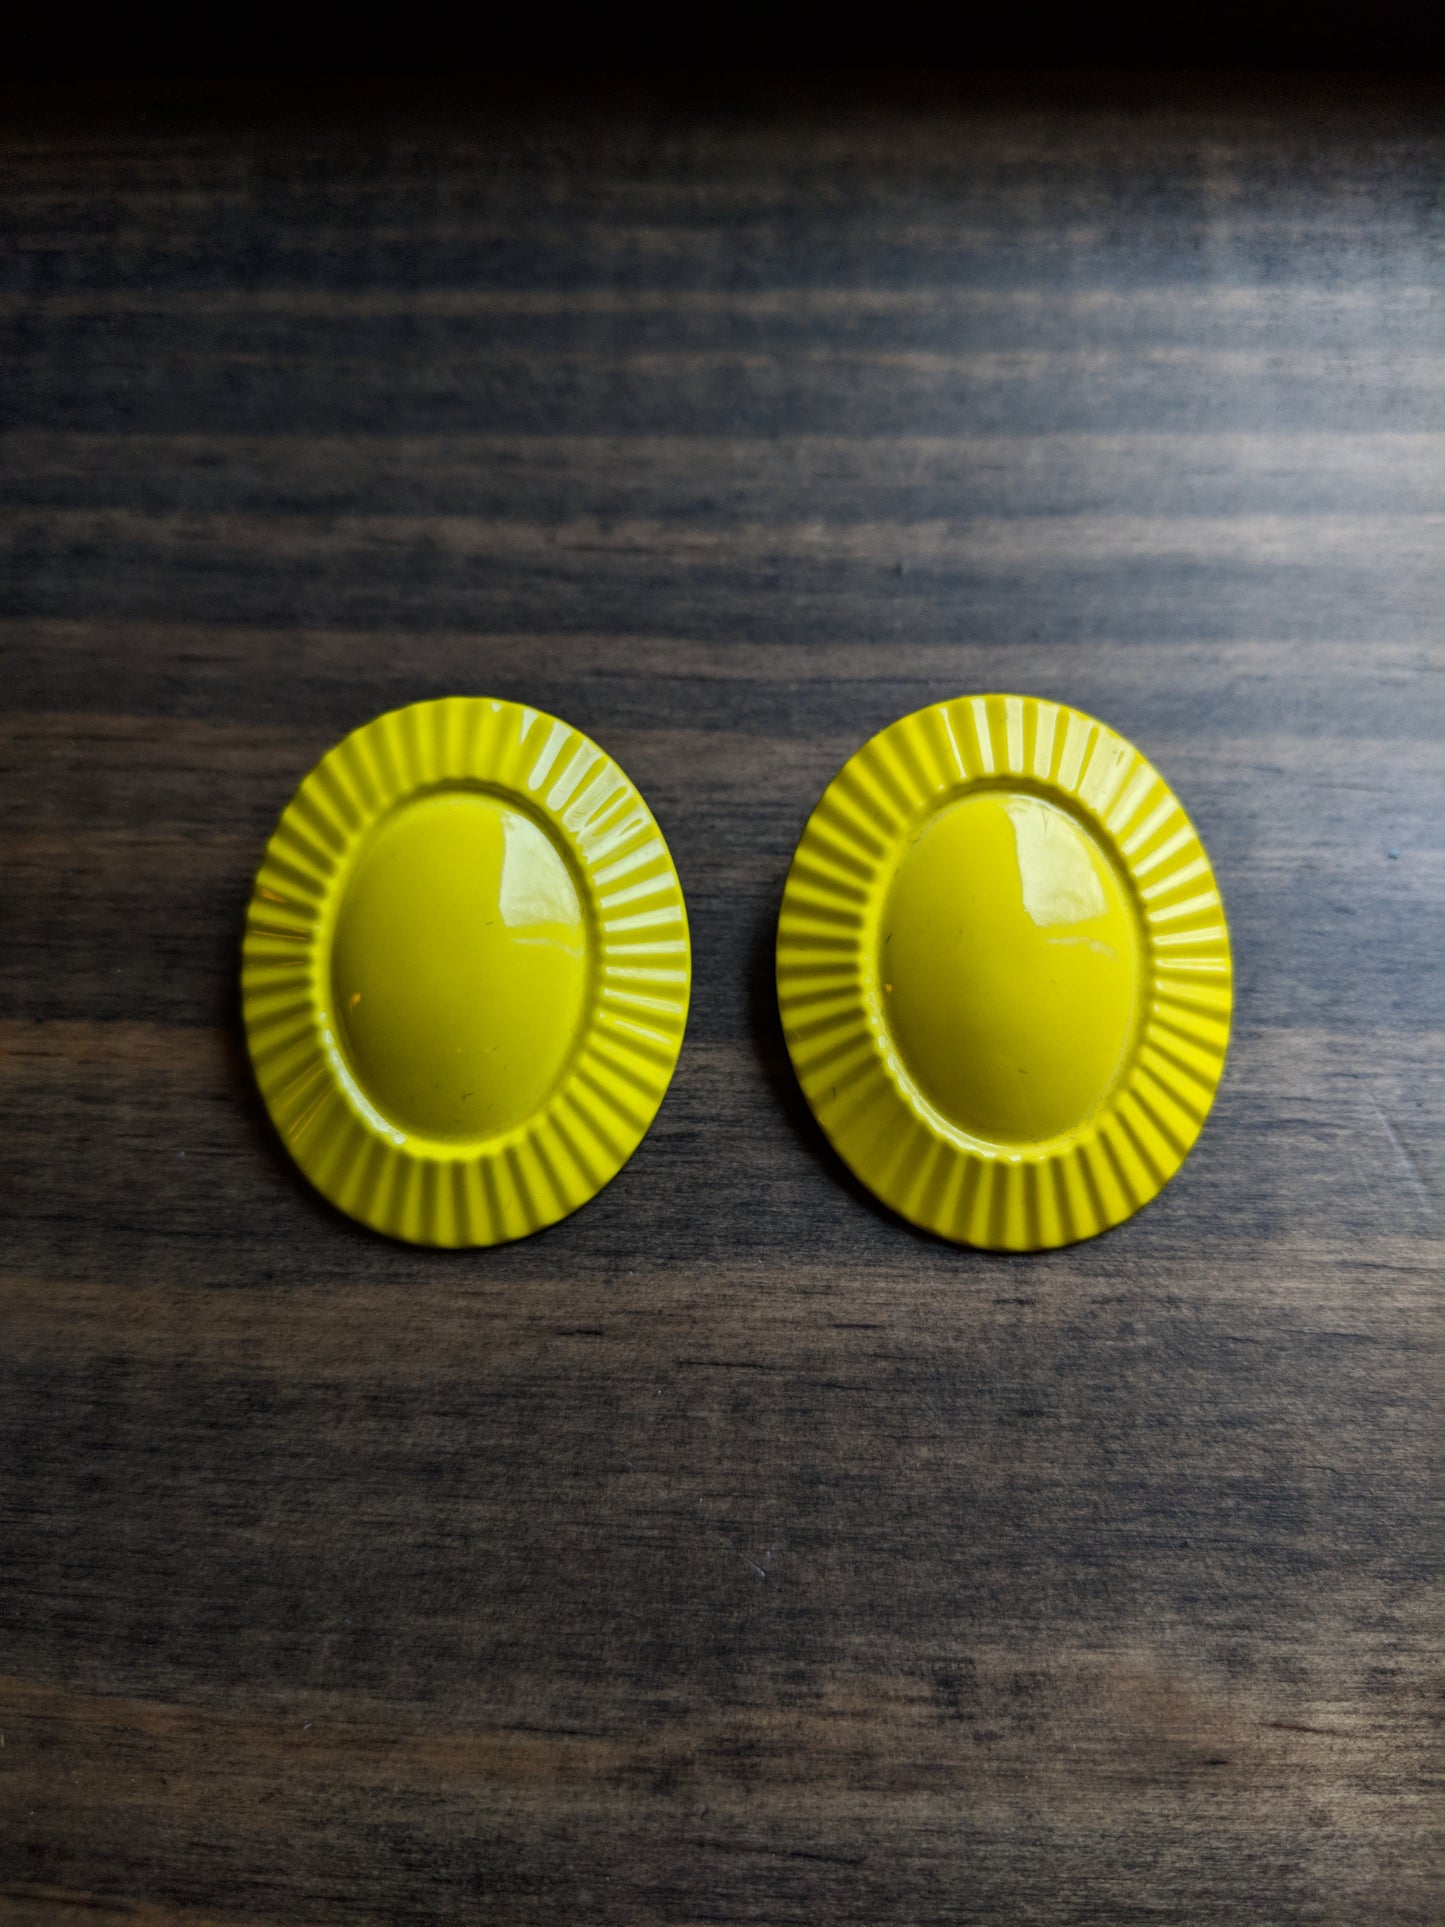 Vintage 80s/90s Oval Yellow Earrings